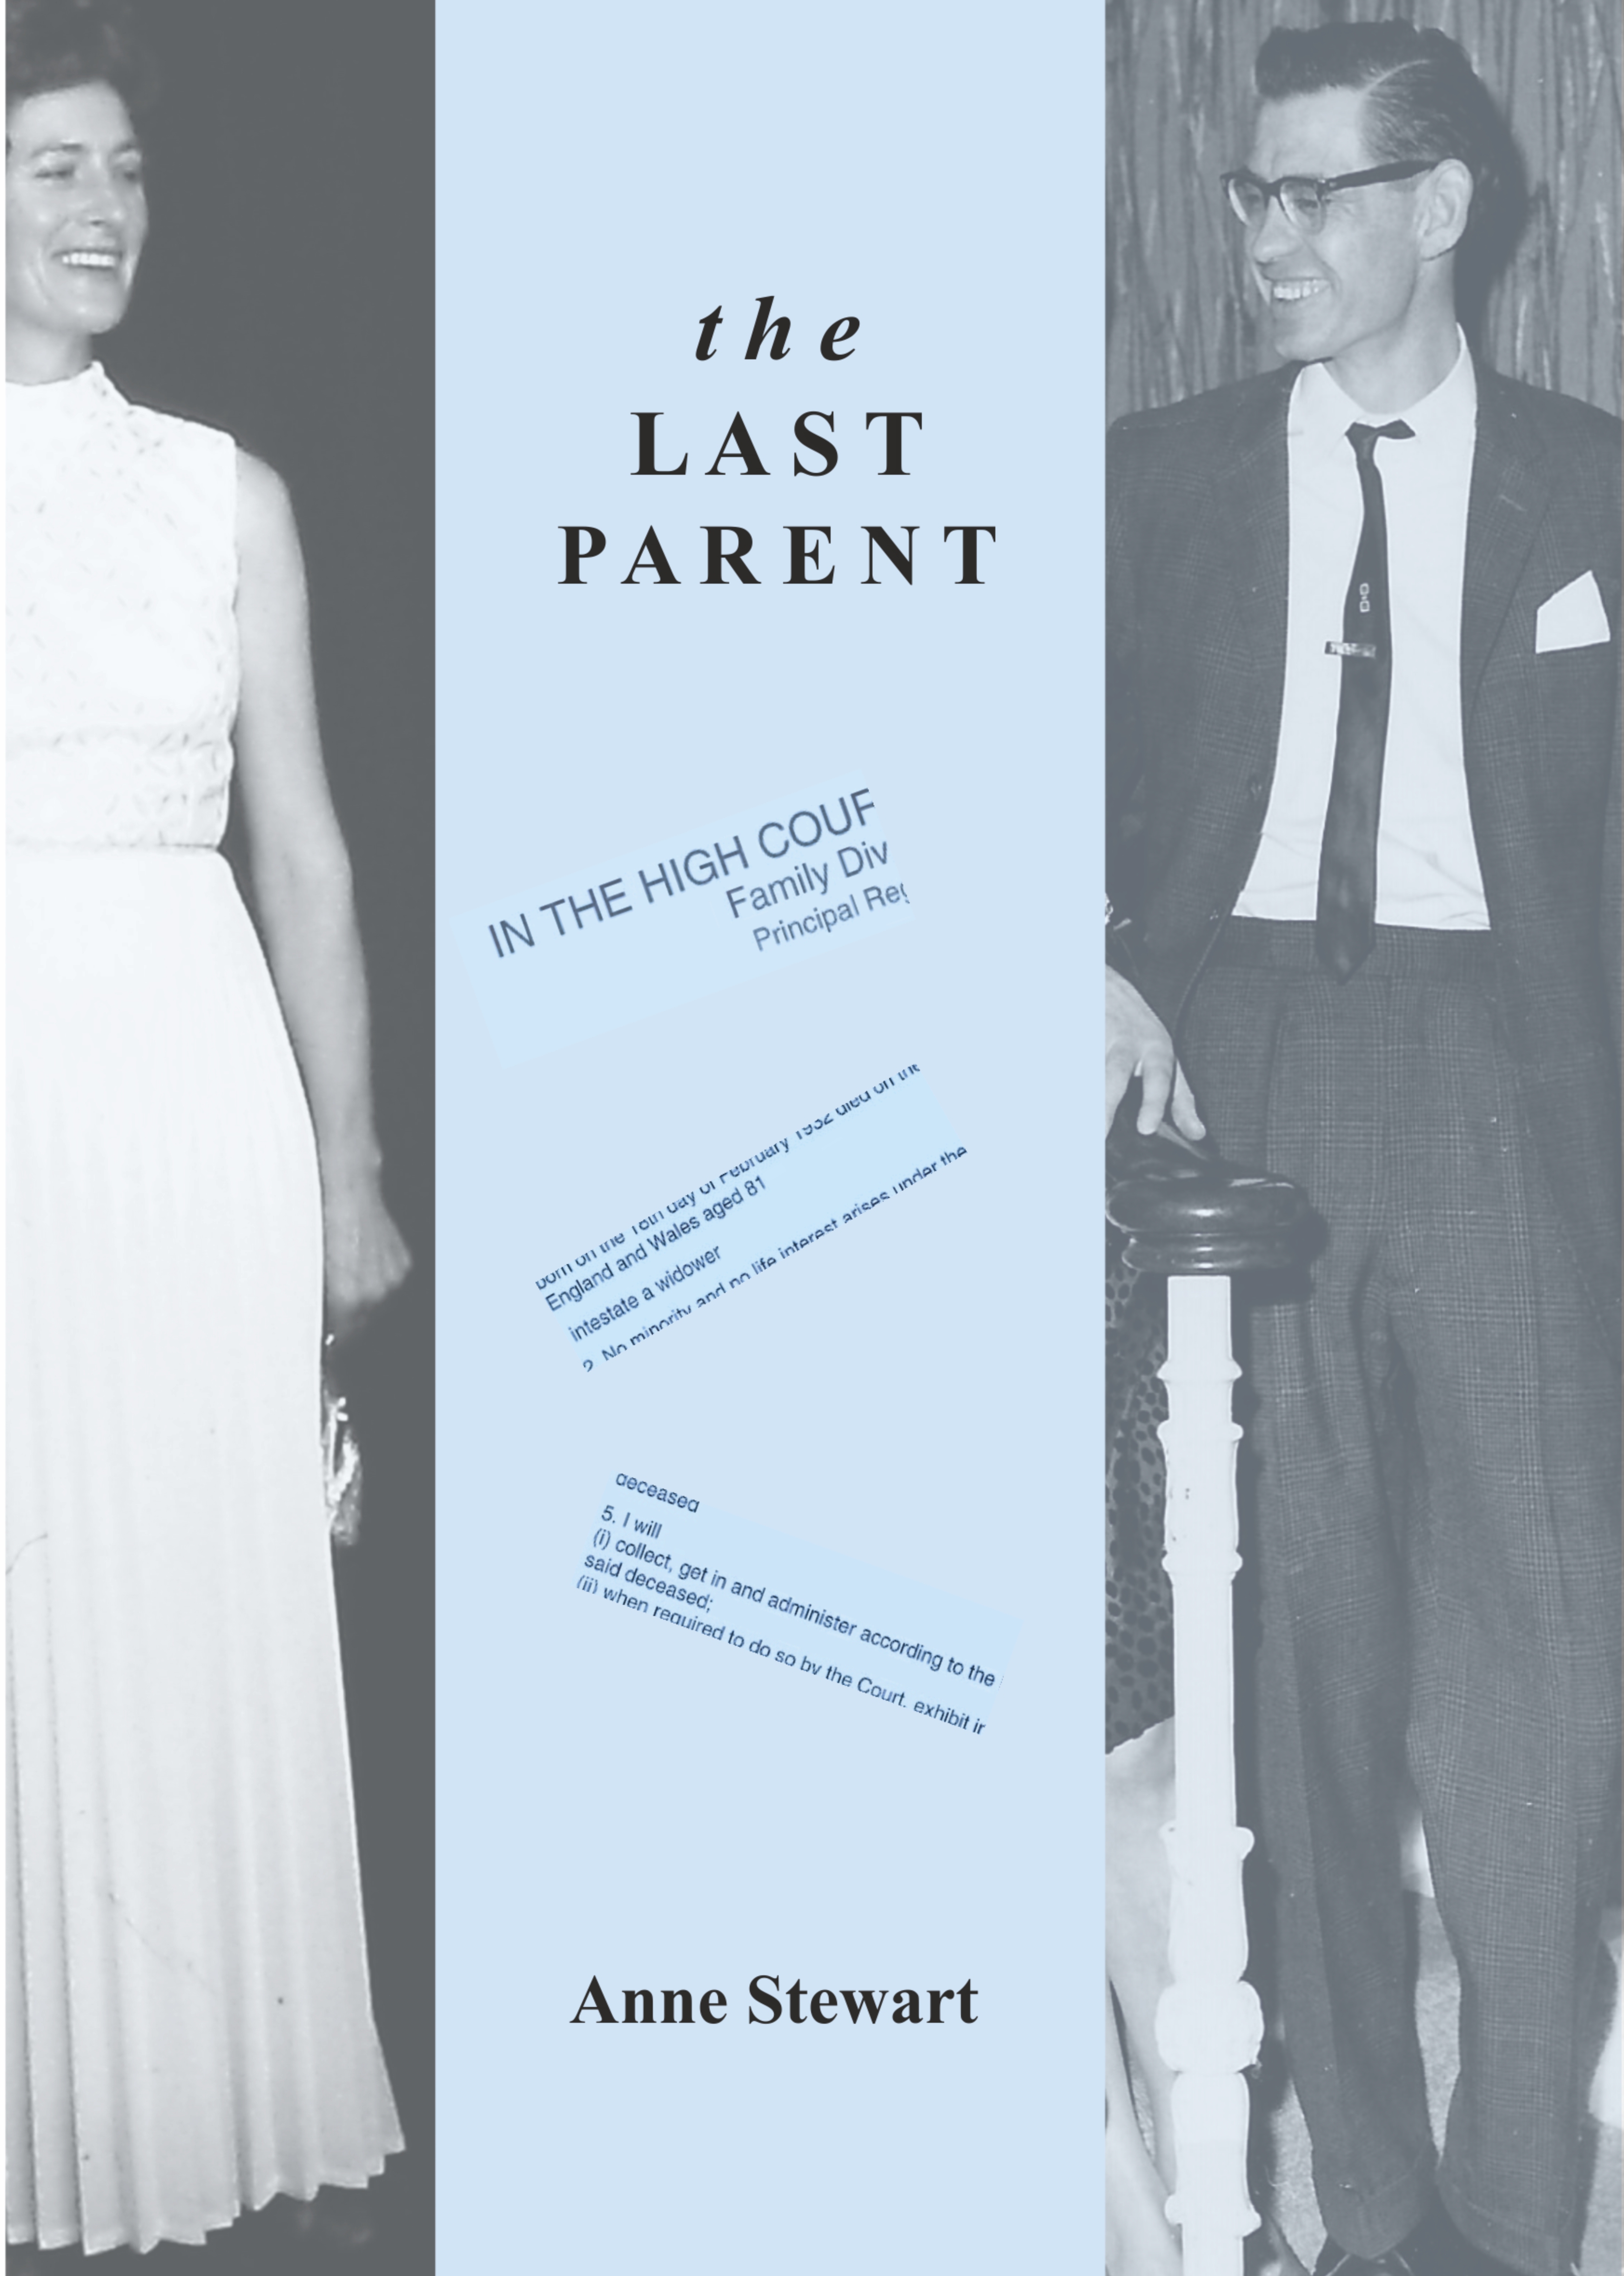 Image: The Last Parent cover